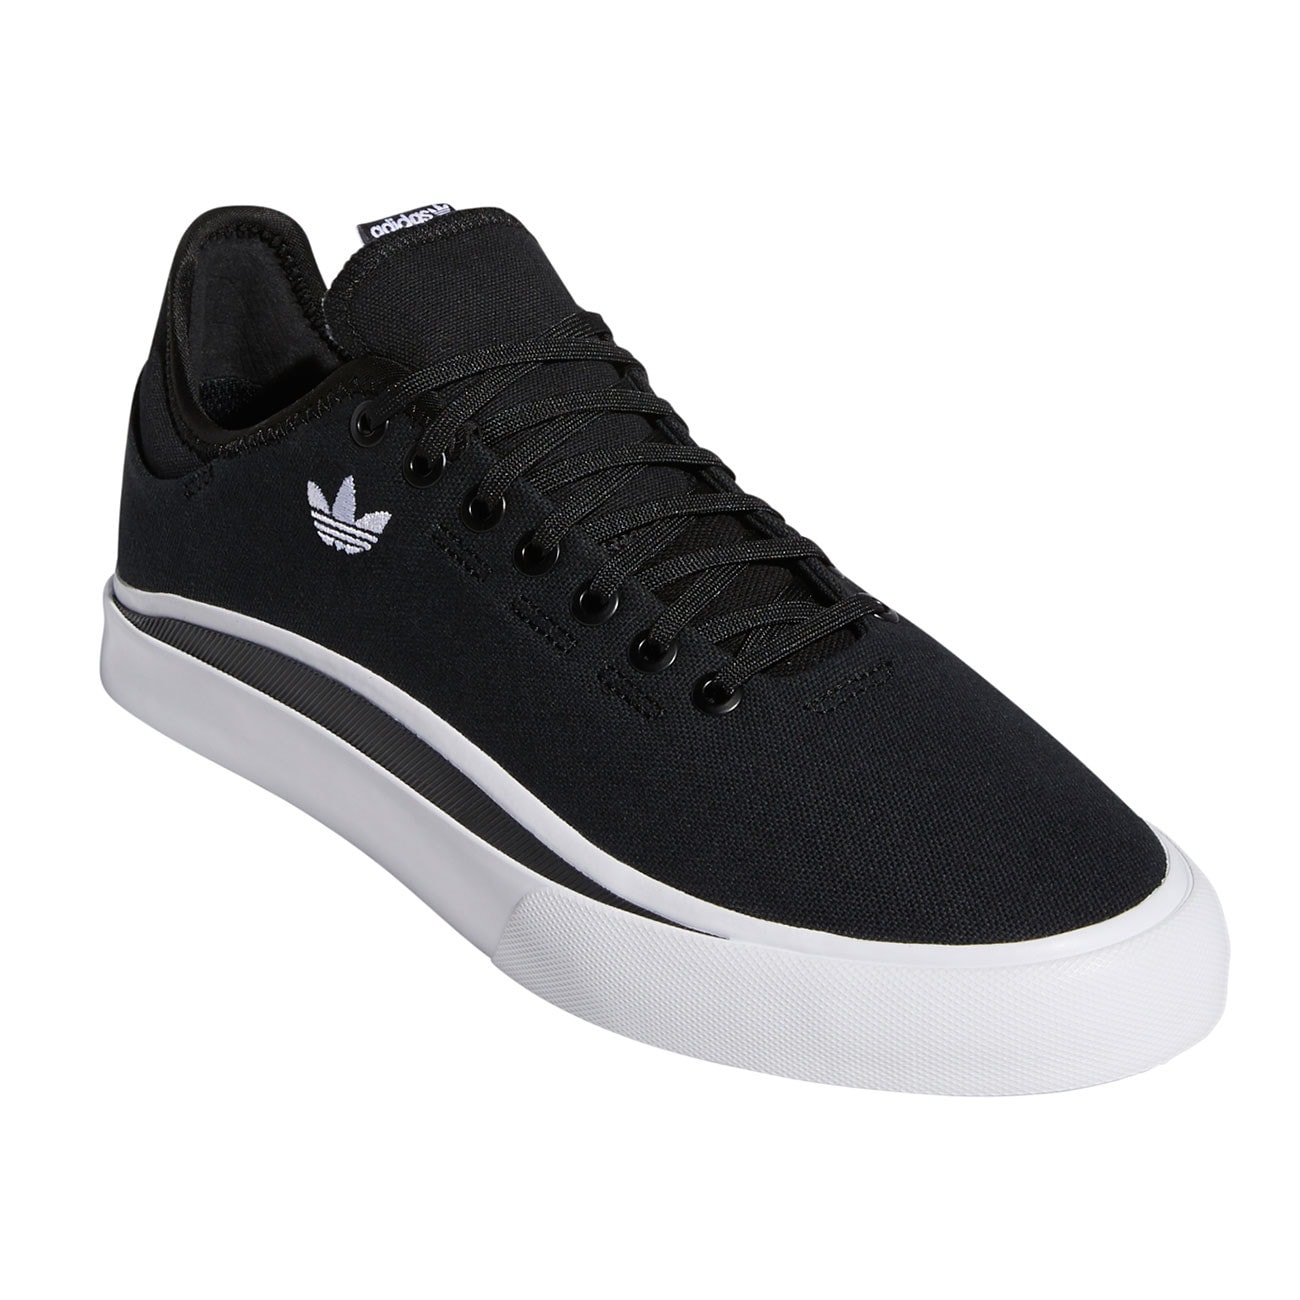 Sneakers Adidas core black/cloud white/core blck | Snowboard